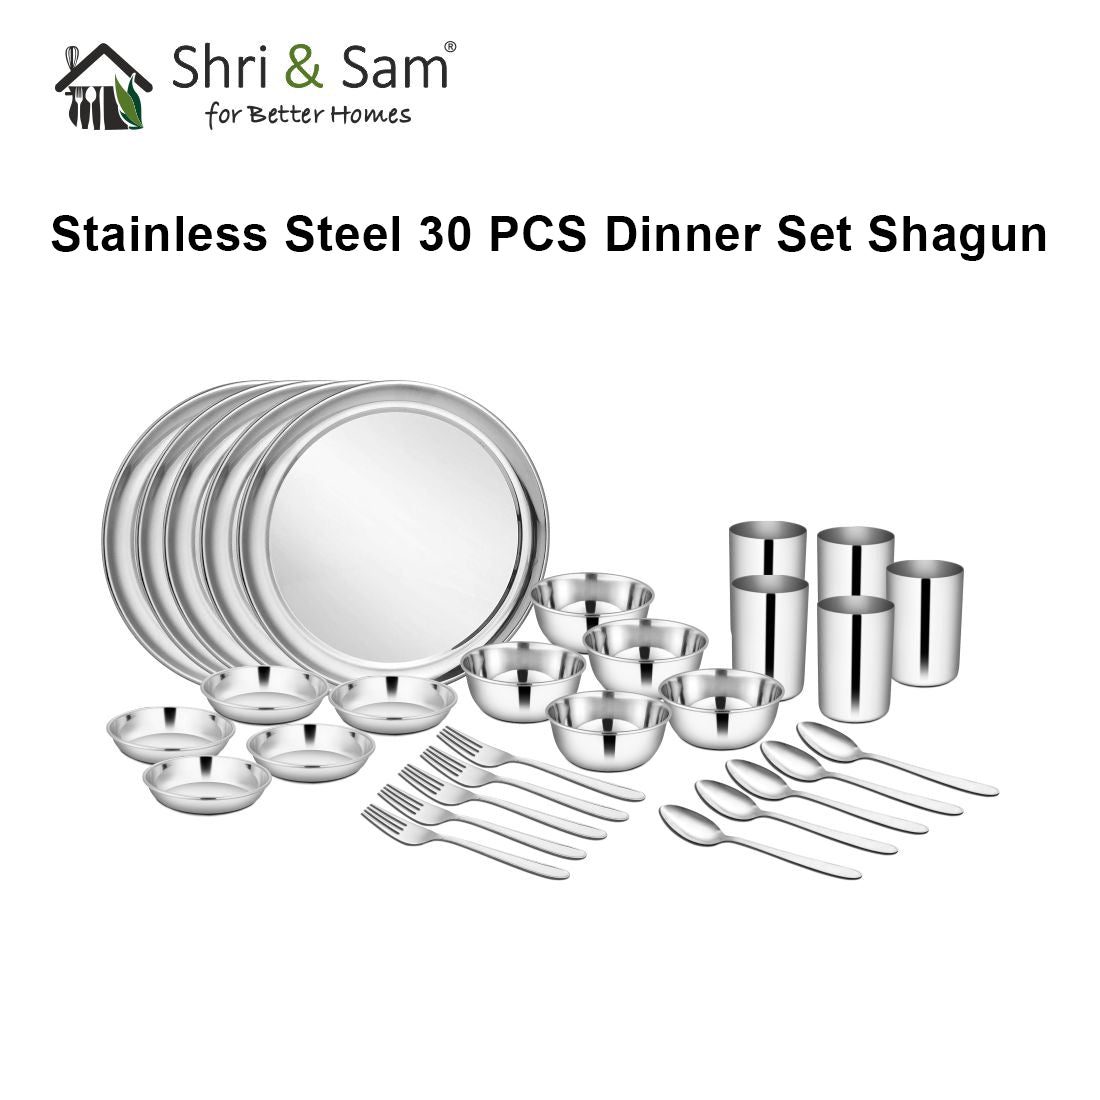 Stainless Steel 30 PCS Dinner Set (5 People) Shagun